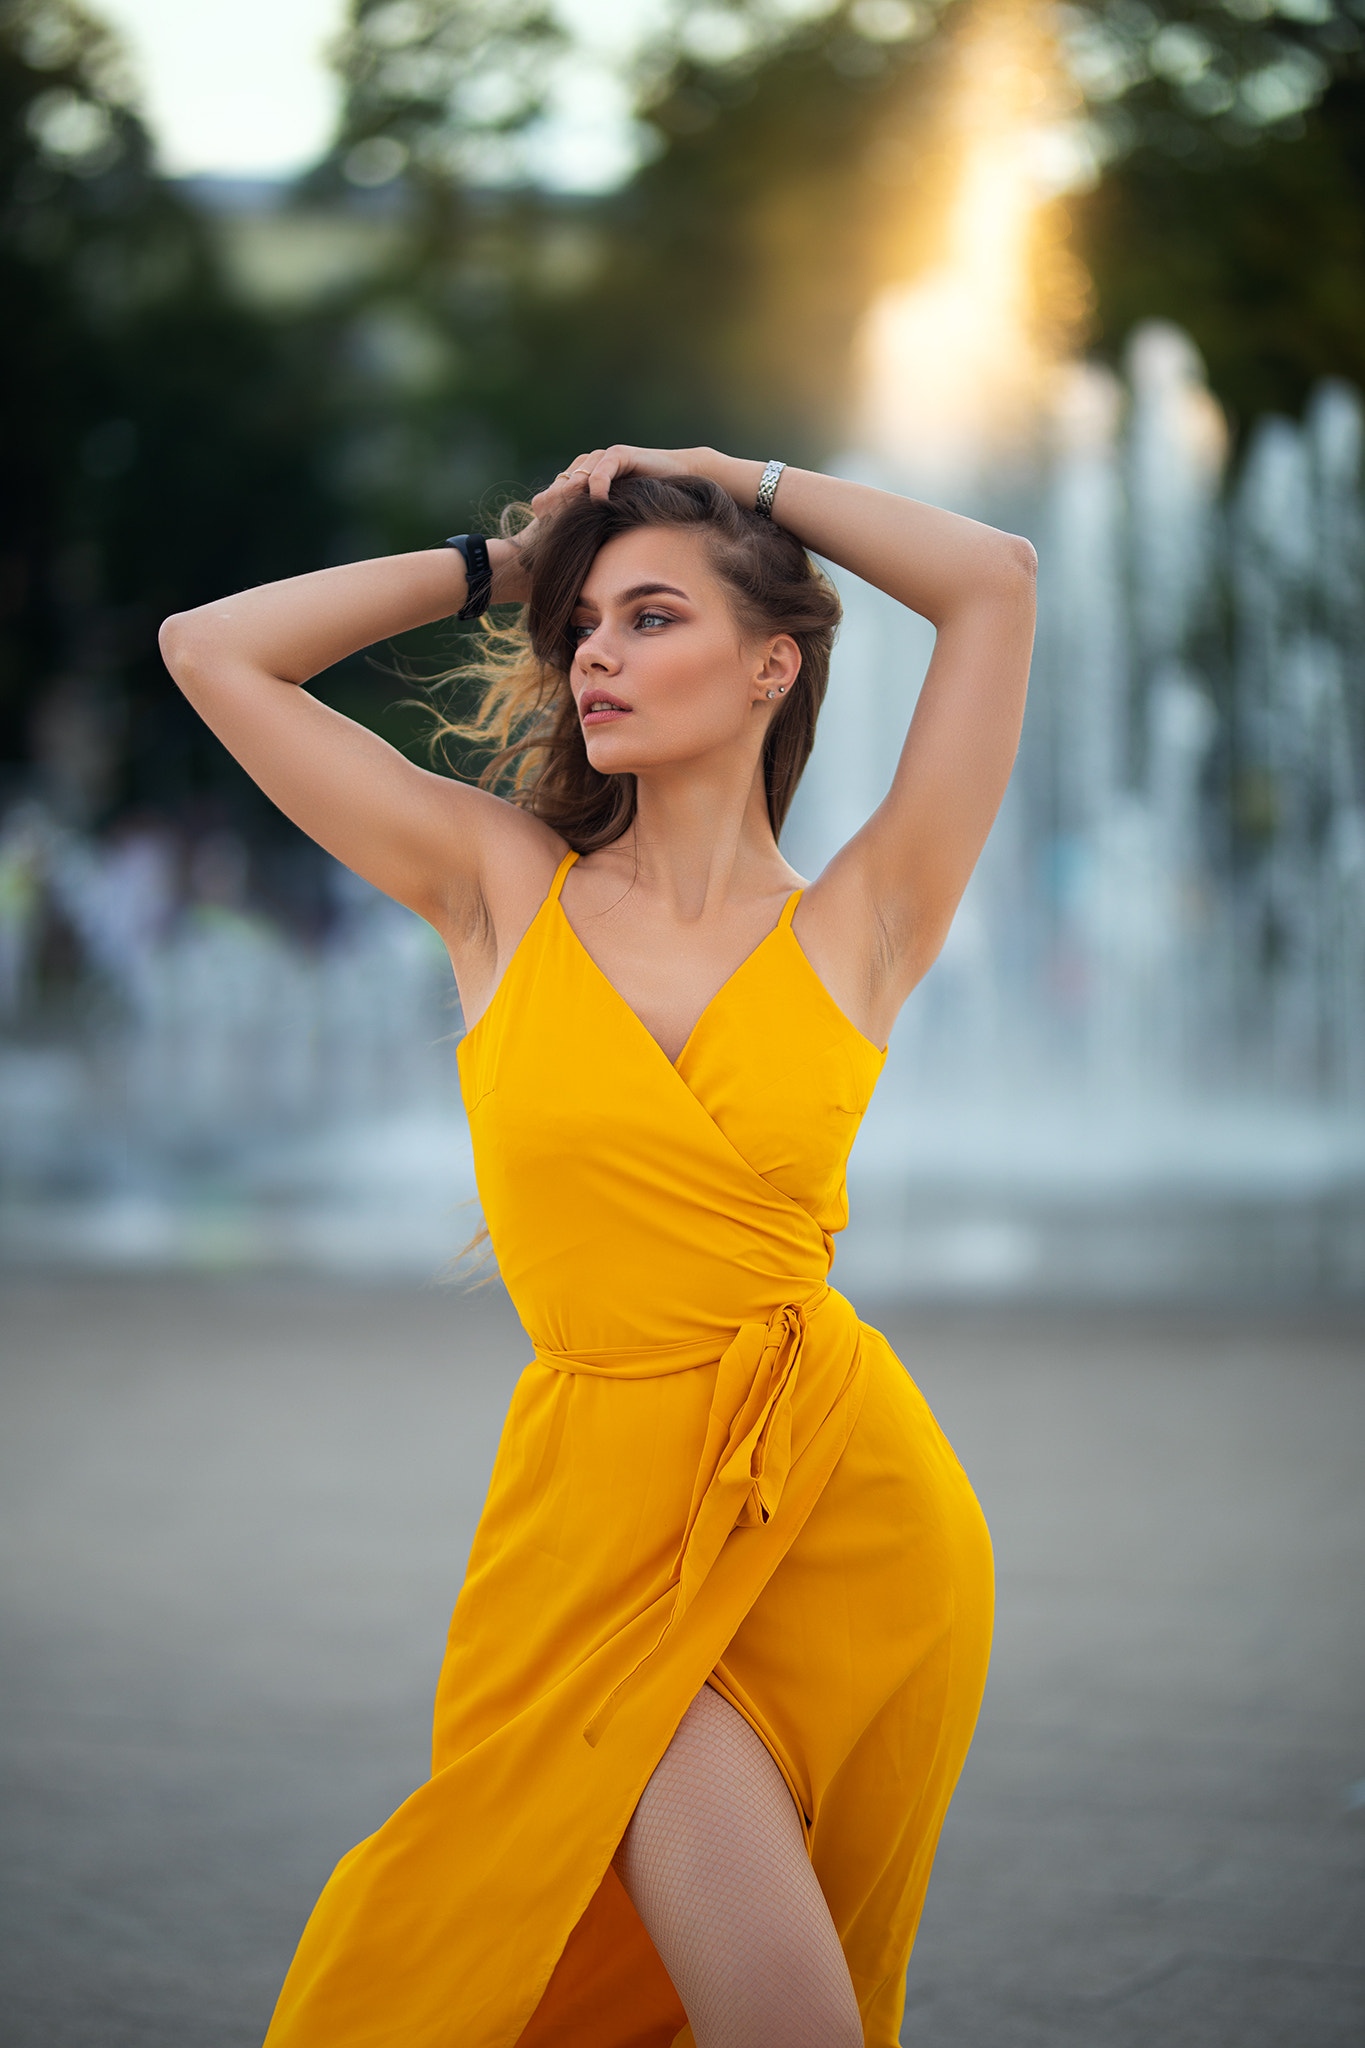 Dmitry Shulgin Women Hands In Hair Wind Dress Yellow Clothing Depth Of Field Model Women Outdoors 1365x2048